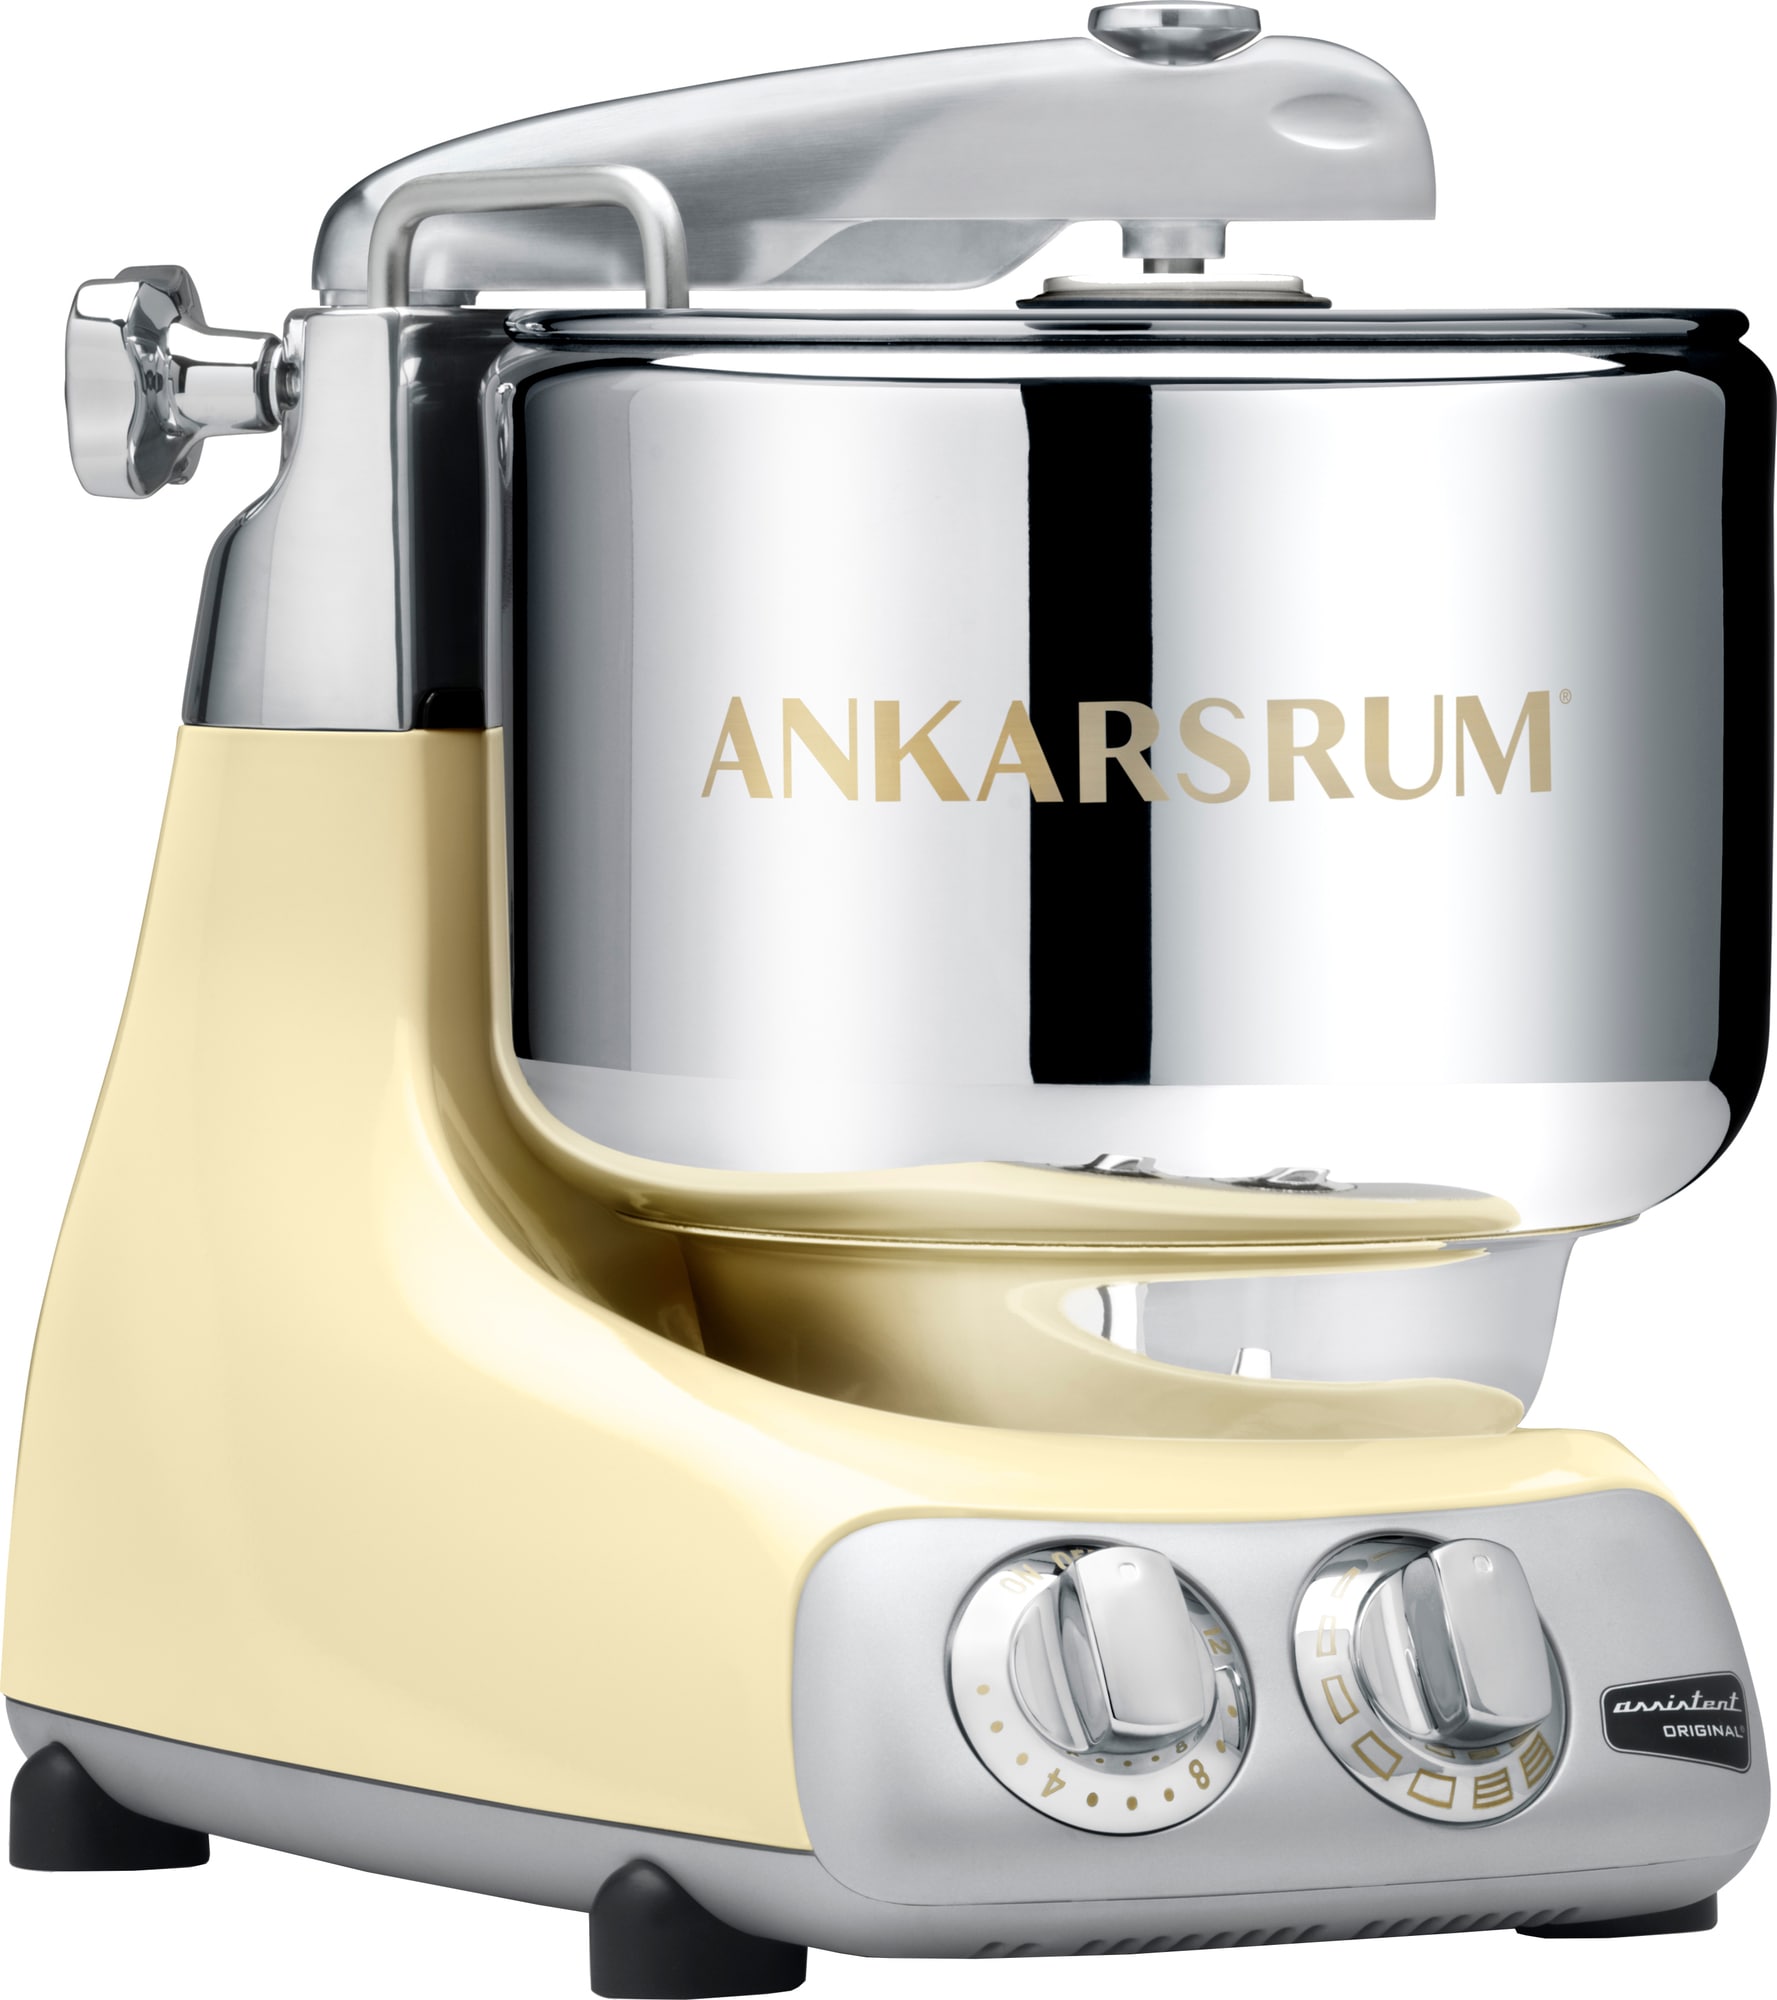 Ankarsrum Creme køkkenmaskine AKM6230C (cream) - Køkkenmaskiner ...